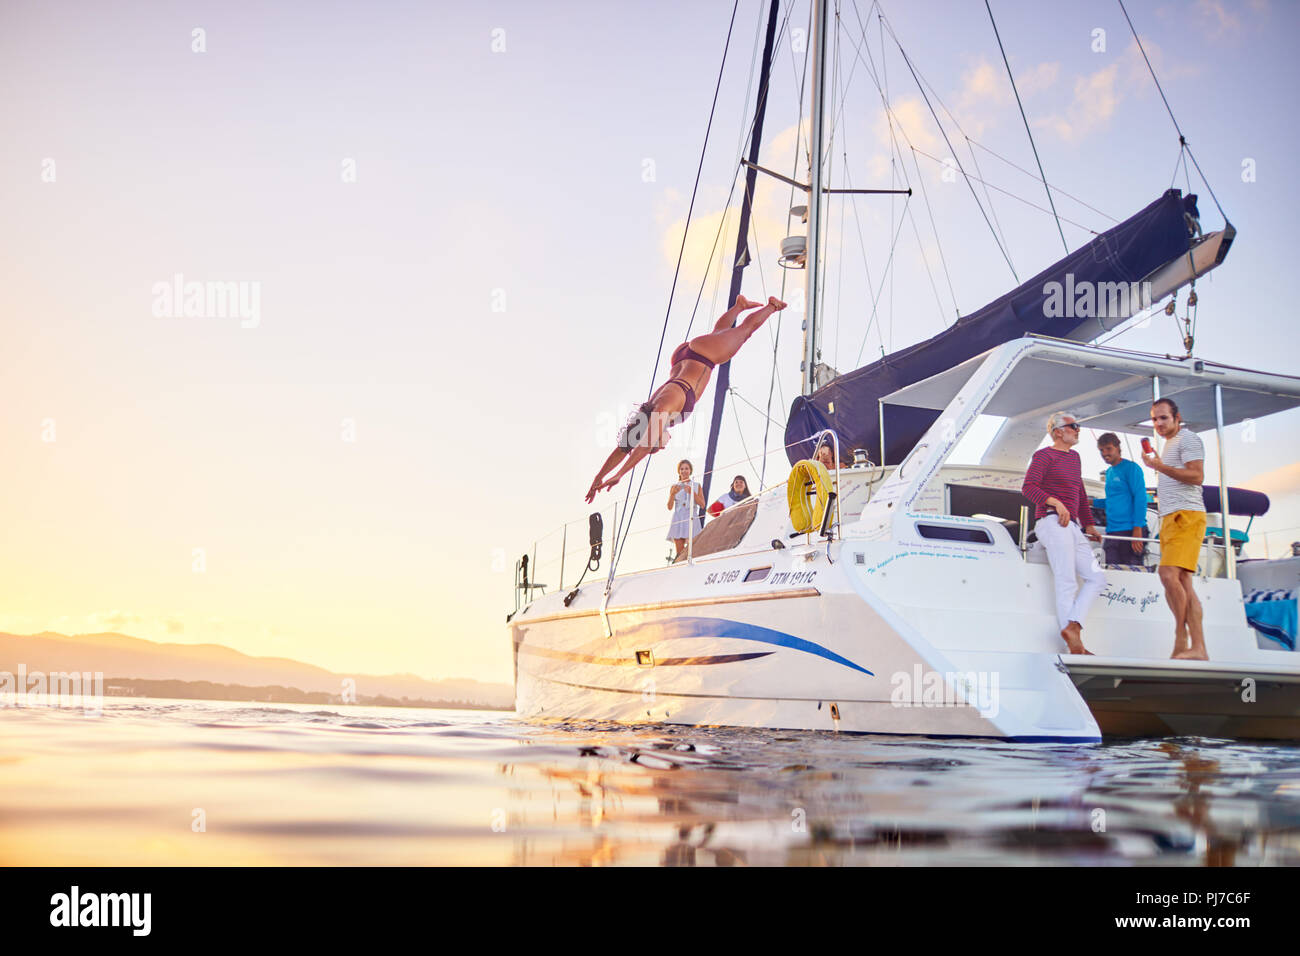 Young woman diving off catamaran into ocean Stock Photo